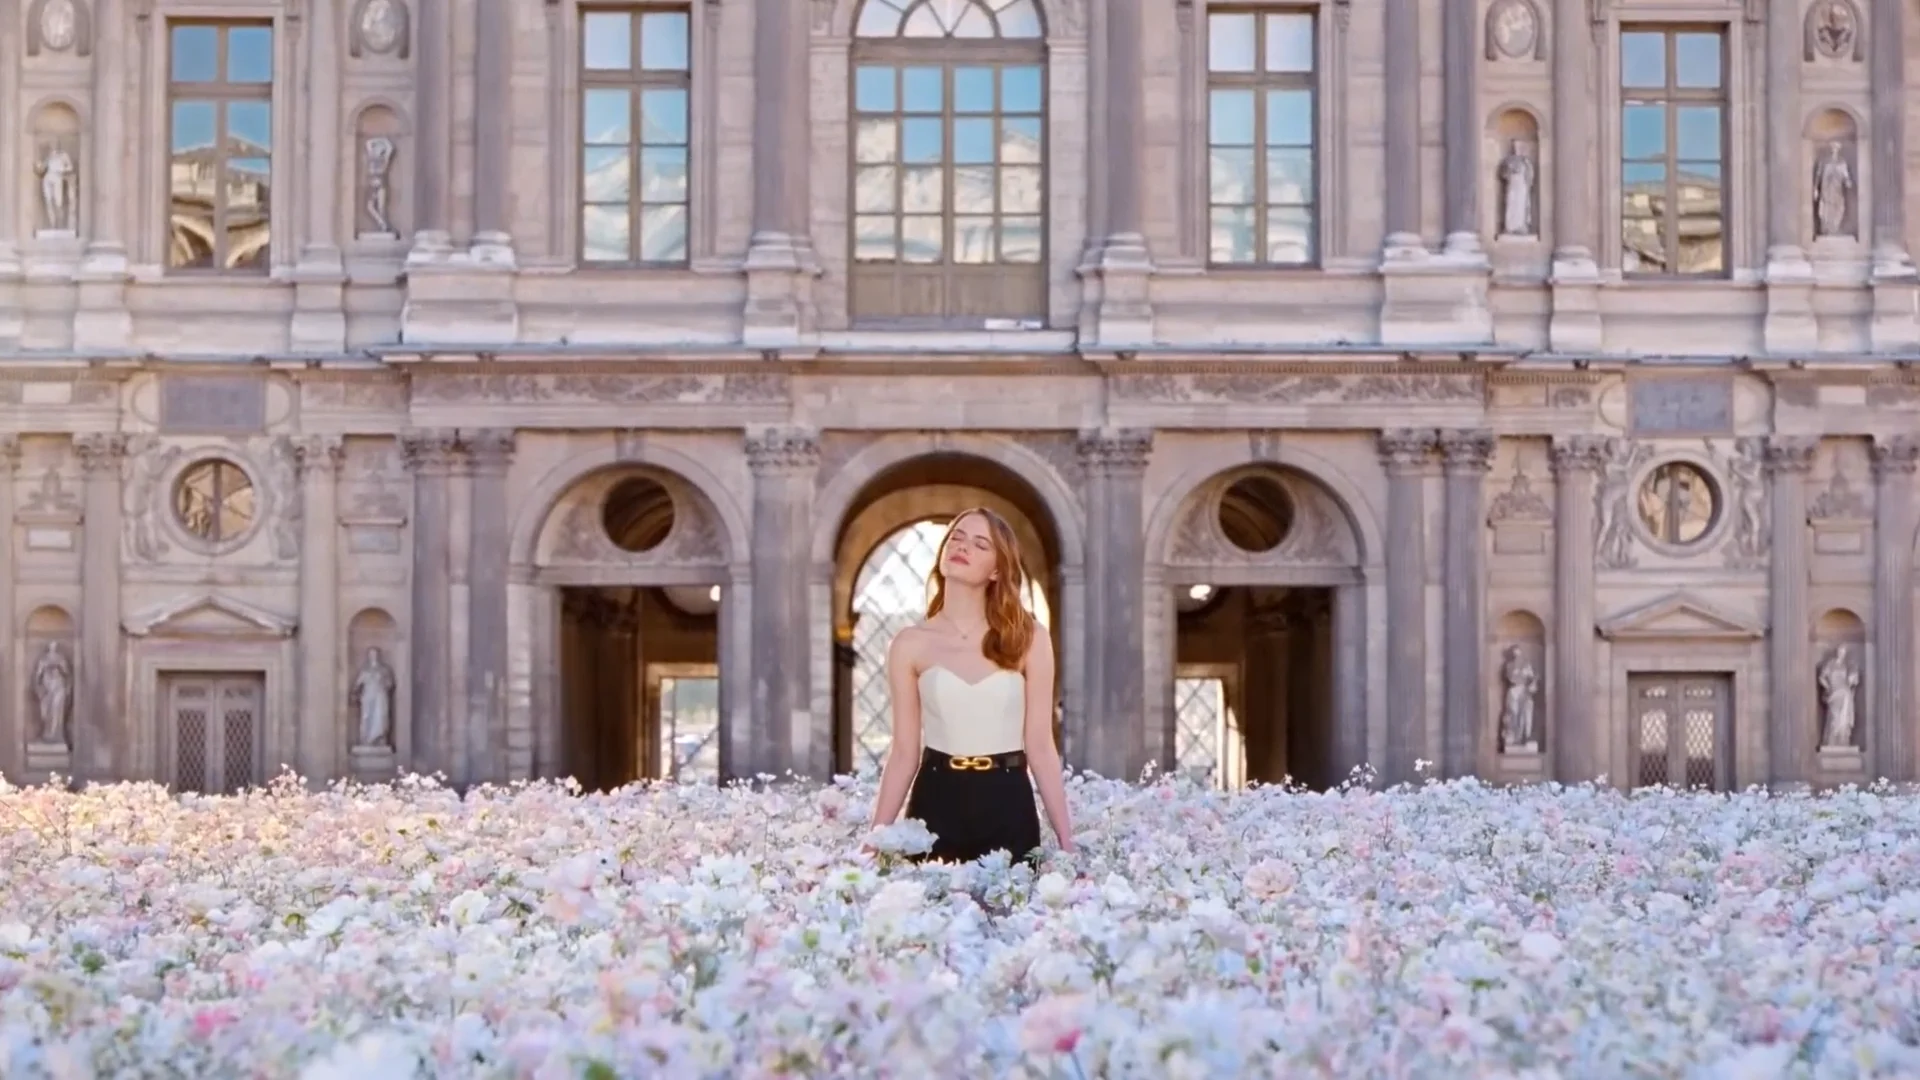 Louis Vuitton Coeur Battant Fragrance Film Starring Emma Stone